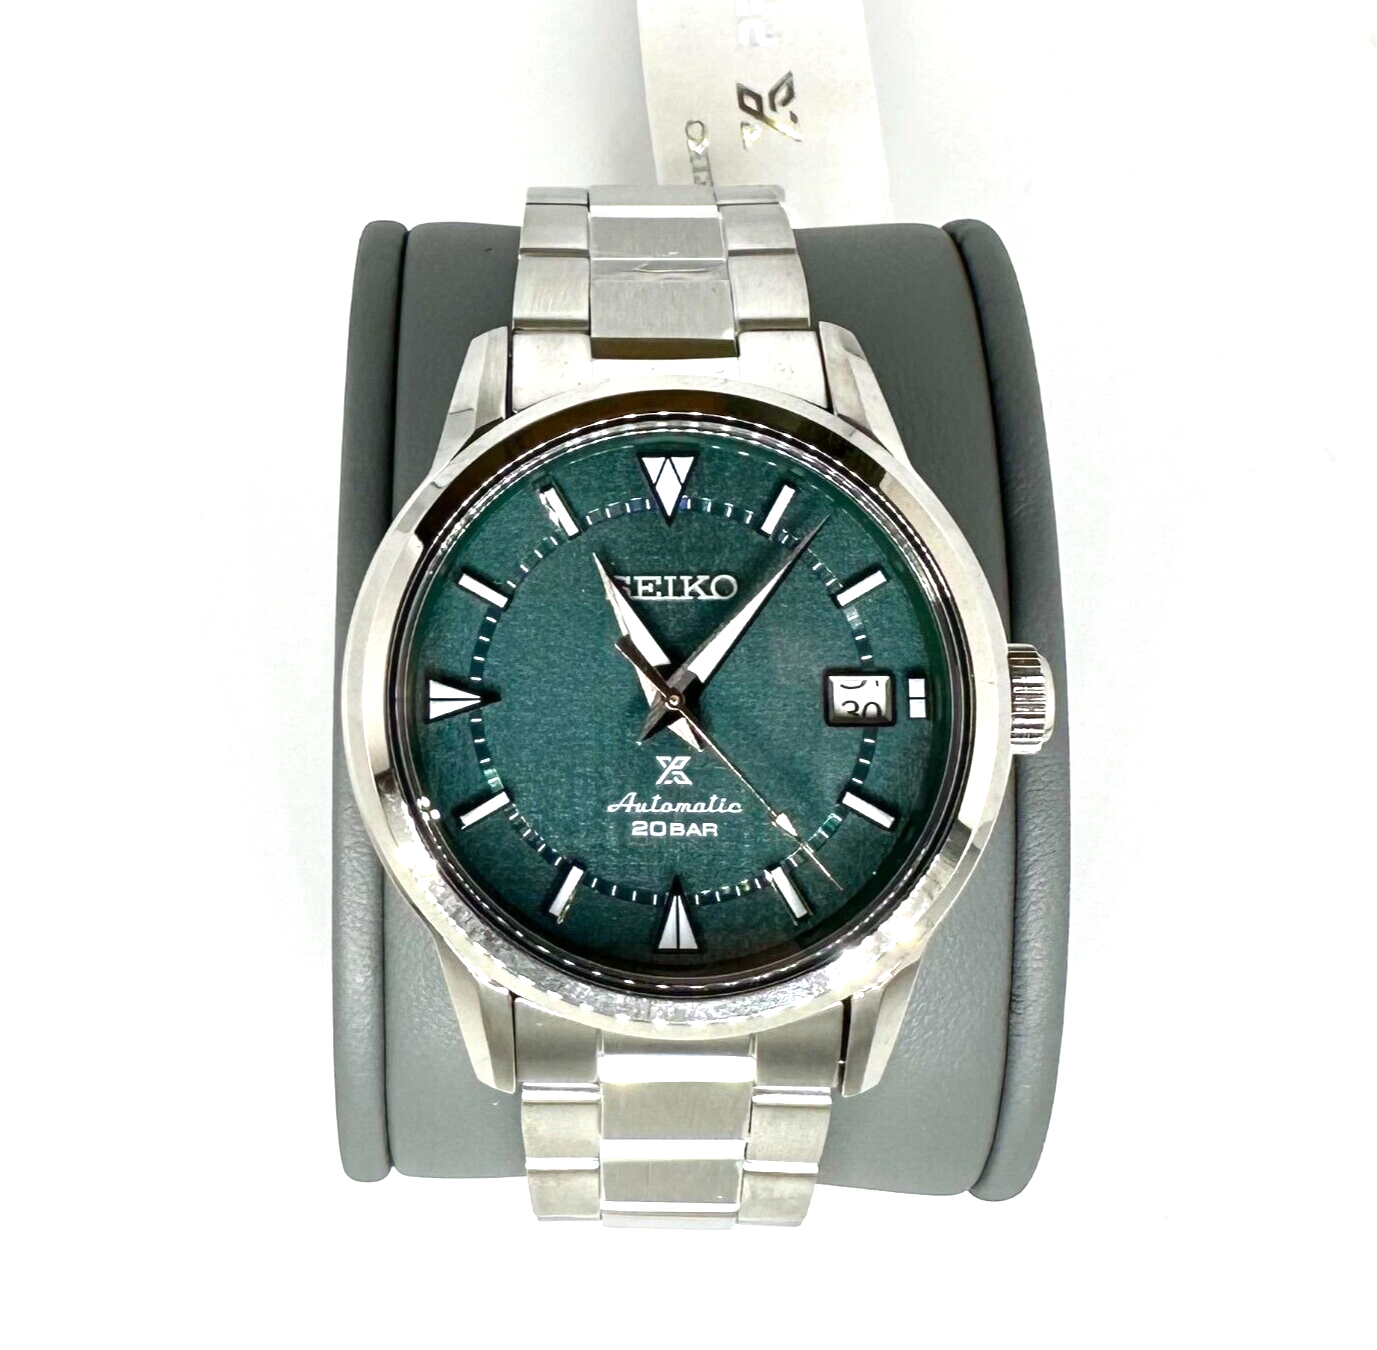 Seiko Prospex Green Men's Watch - SPB289 for sale online | eBay